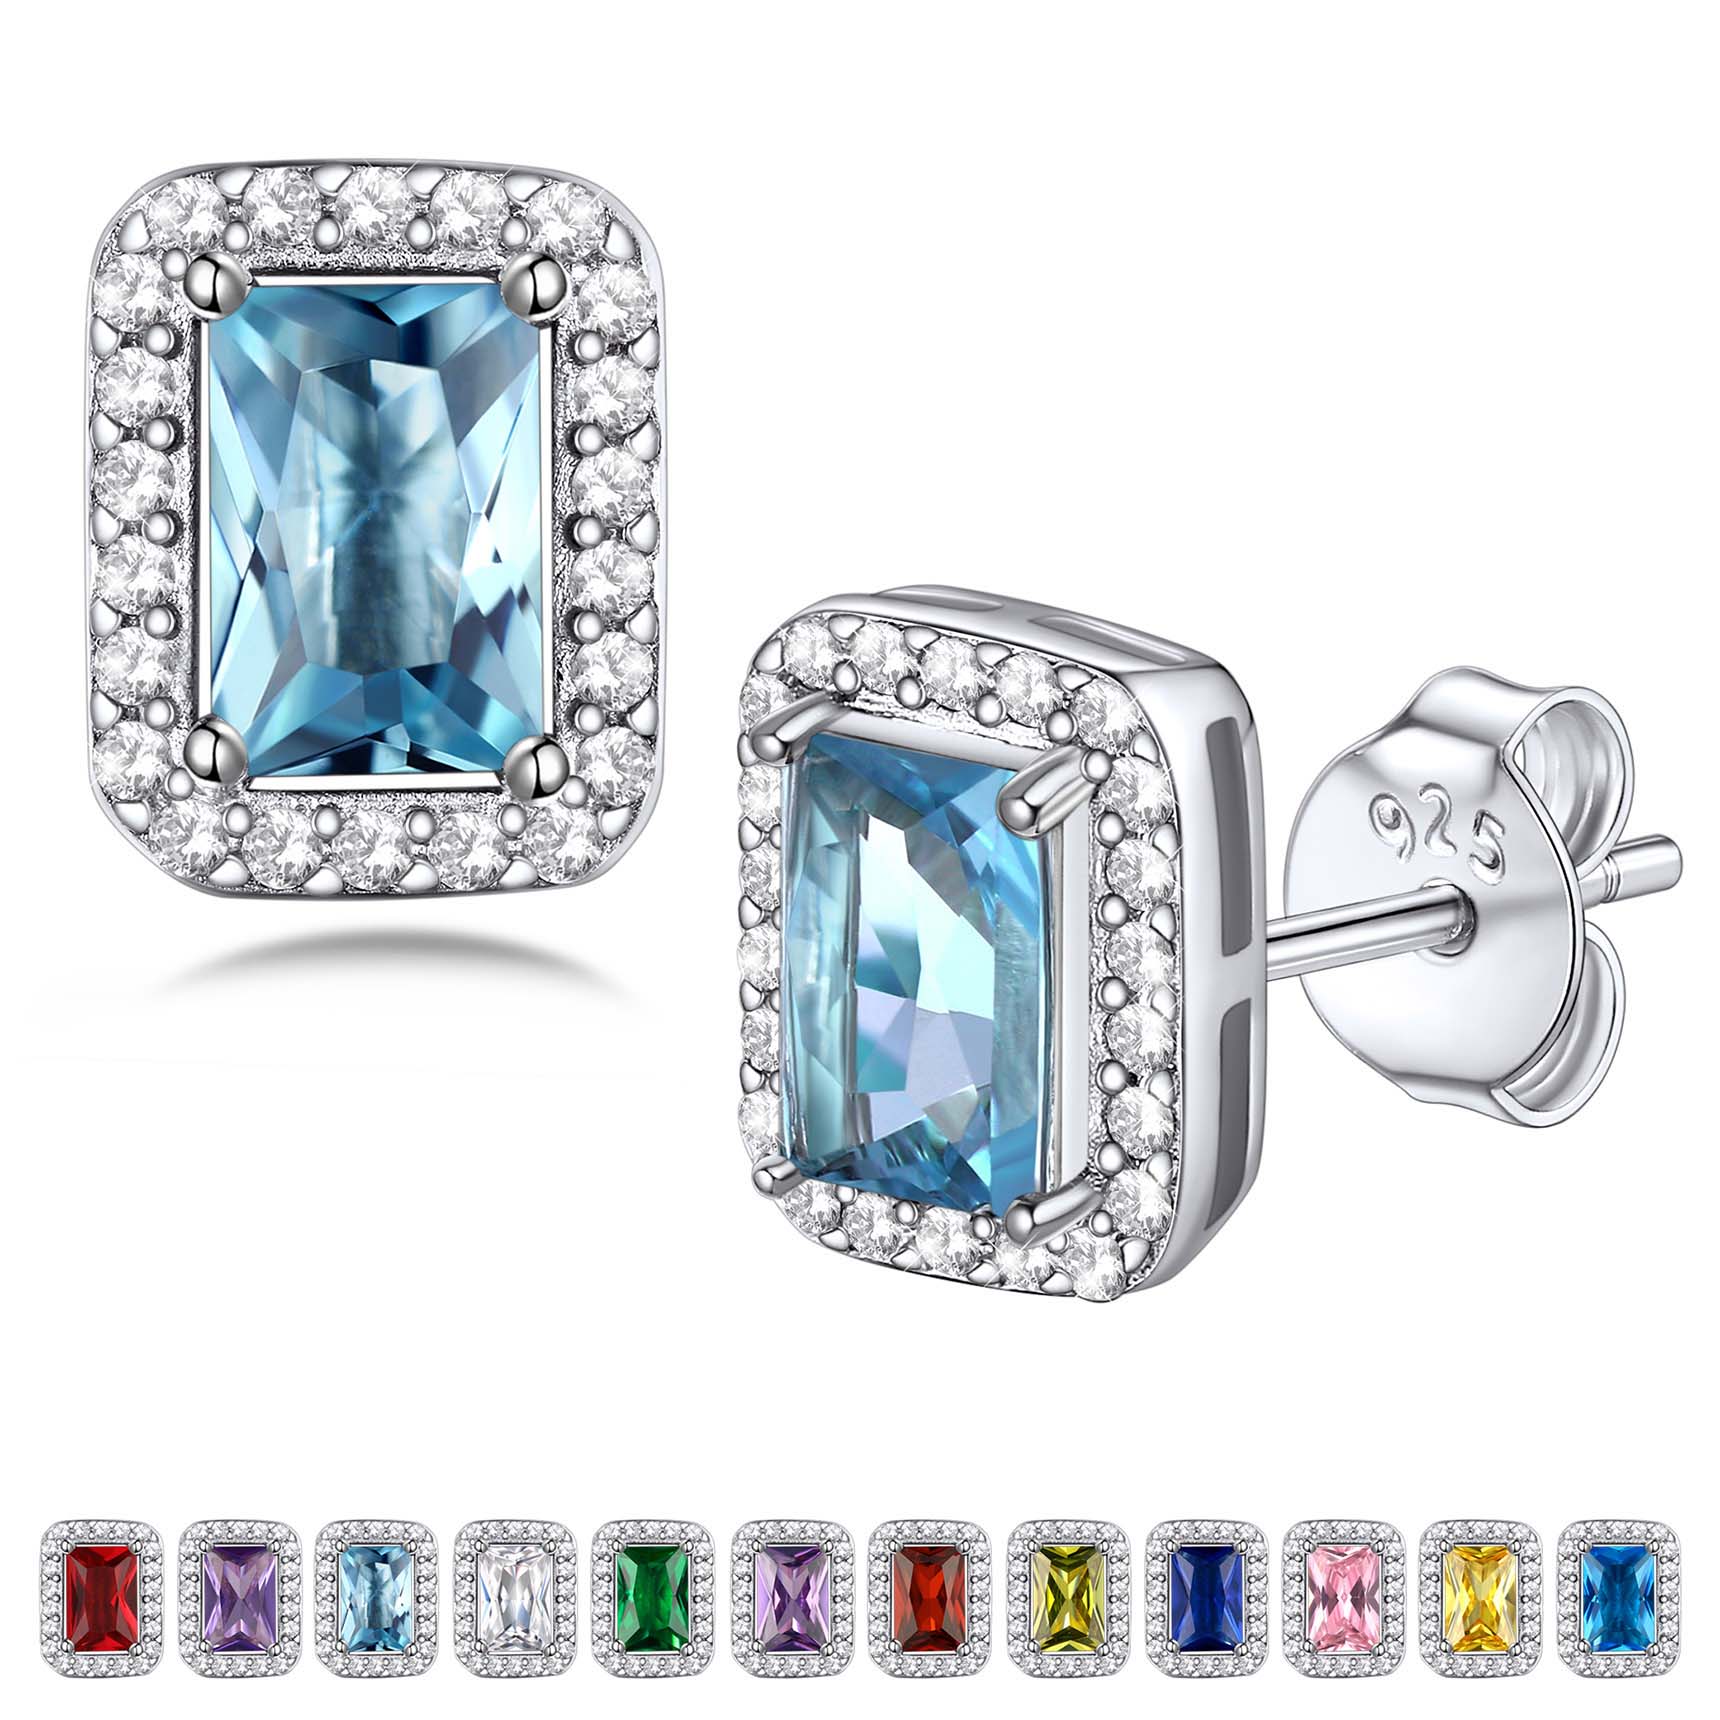 Bestyle Girls Square Diamond Stud Earrings March Aquamarine Birthstone Earrings, Sterling Silver Earrings Birthday Jewelry Gift for Women